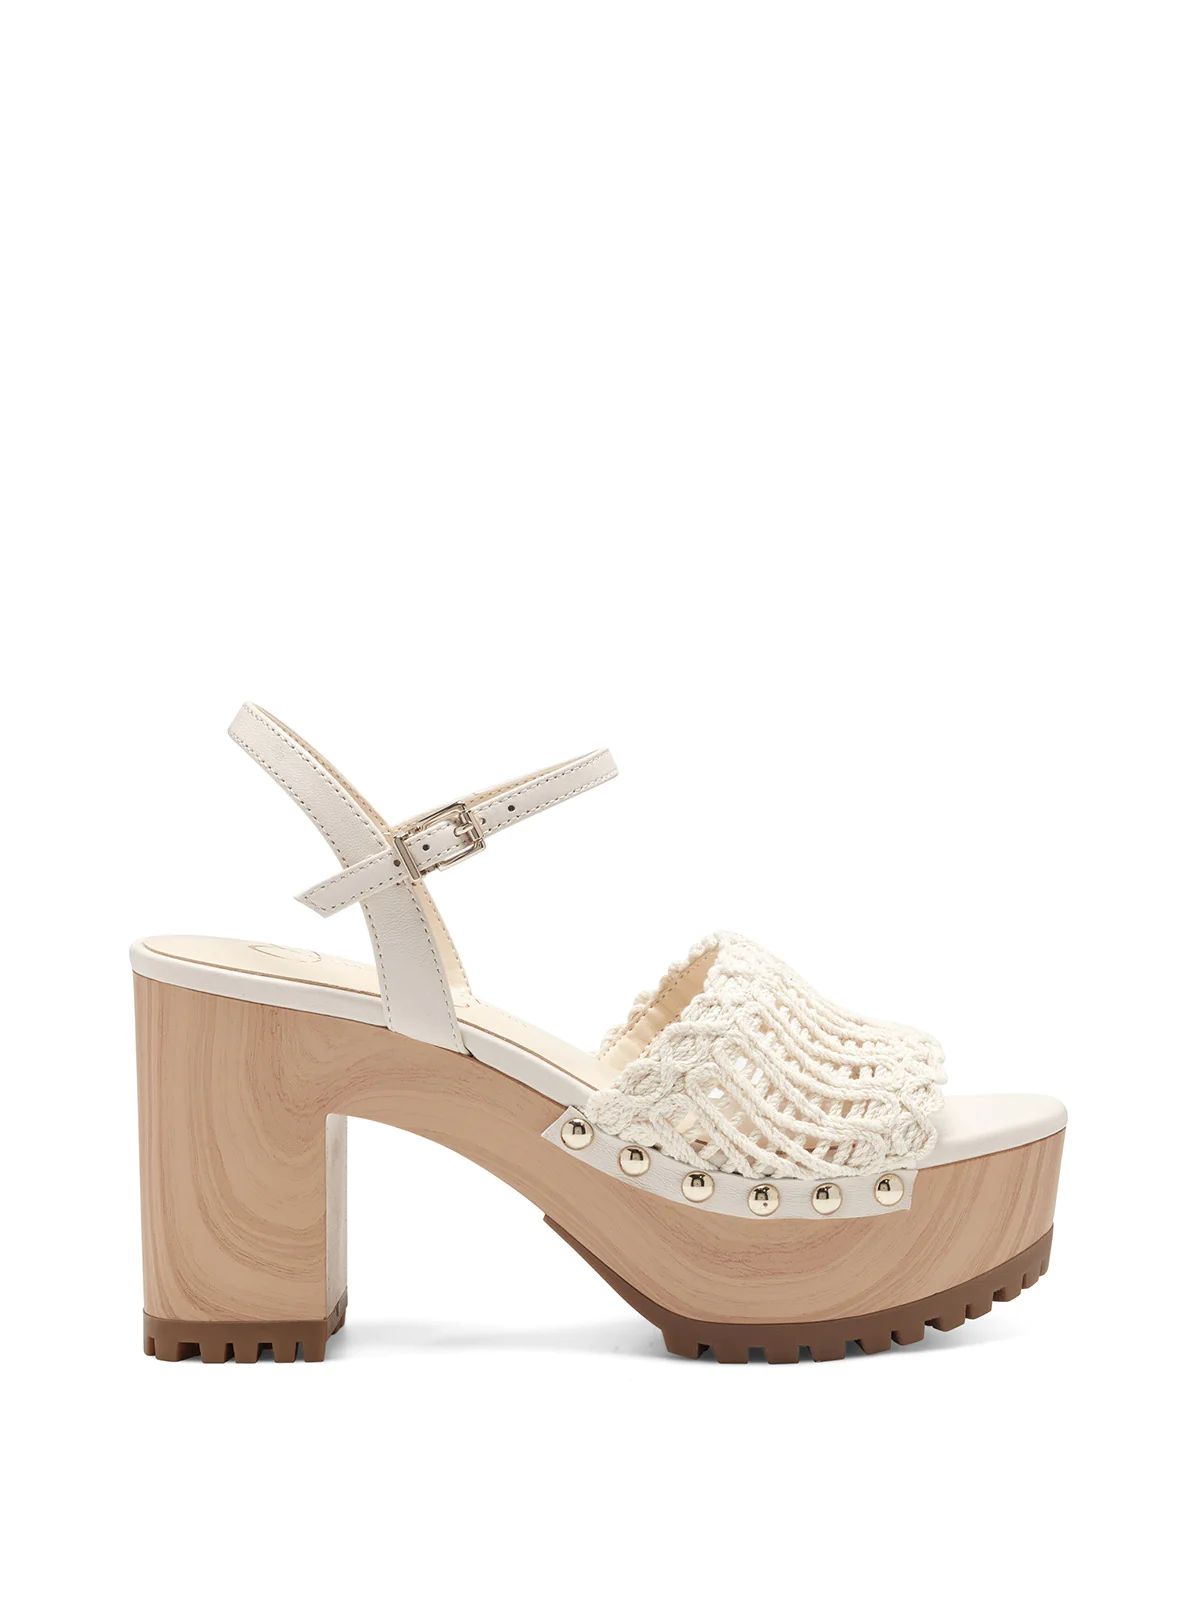 Timia Platform Sandal in Chalk | Jessica Simpson E Commerce